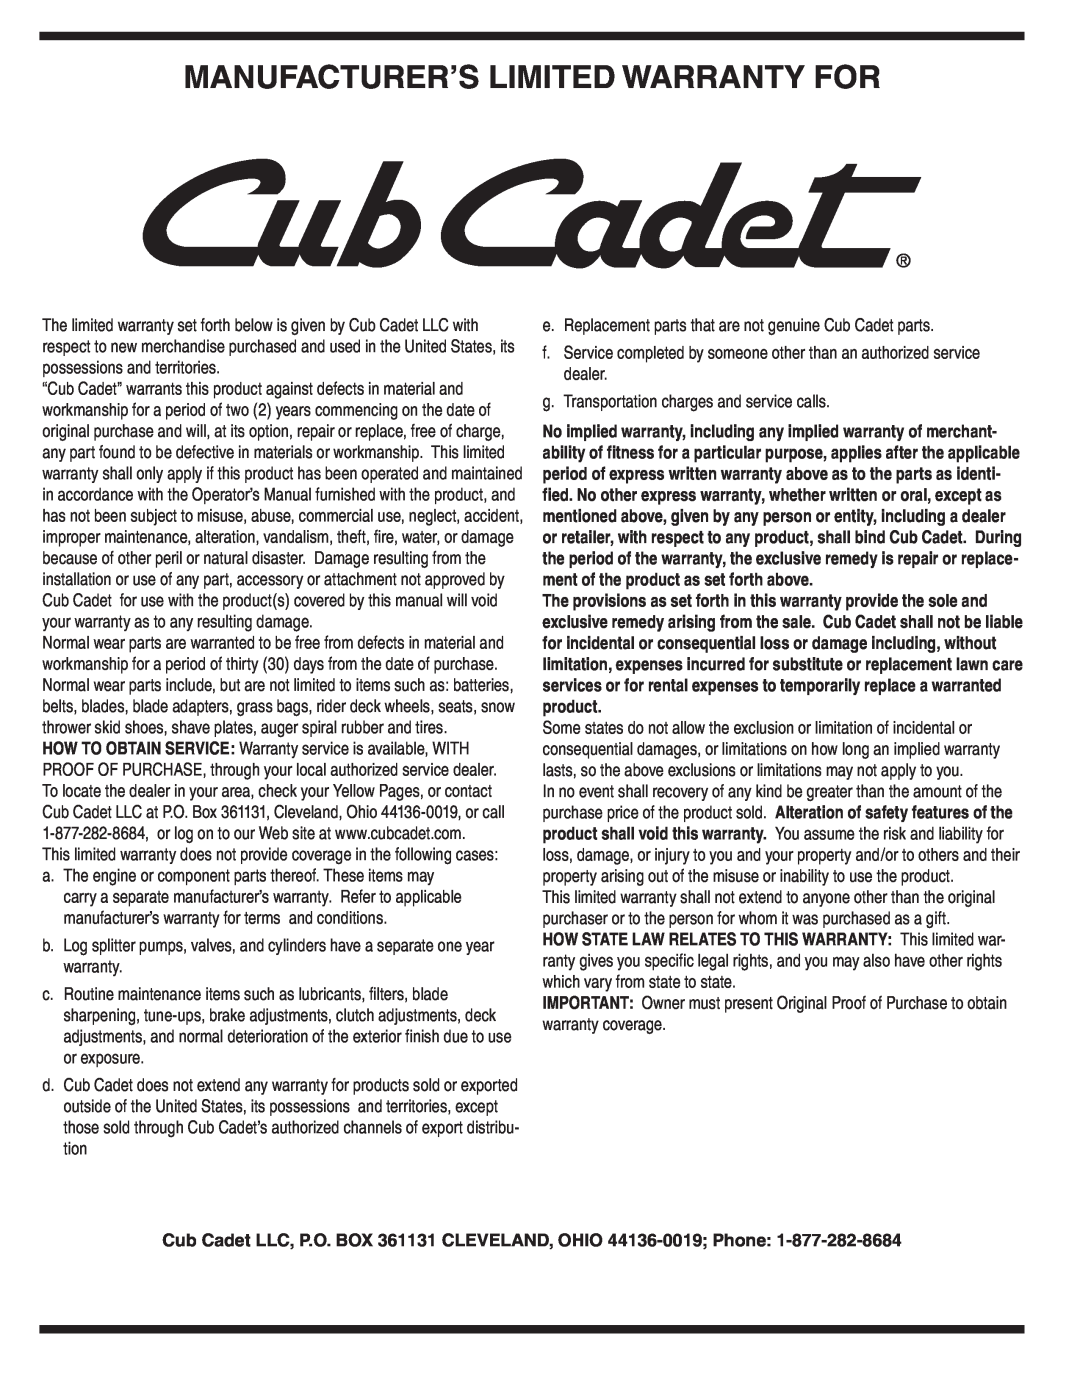 Cub Cadet Series 390 warranty Manufacturer’S Limited Warranty For 